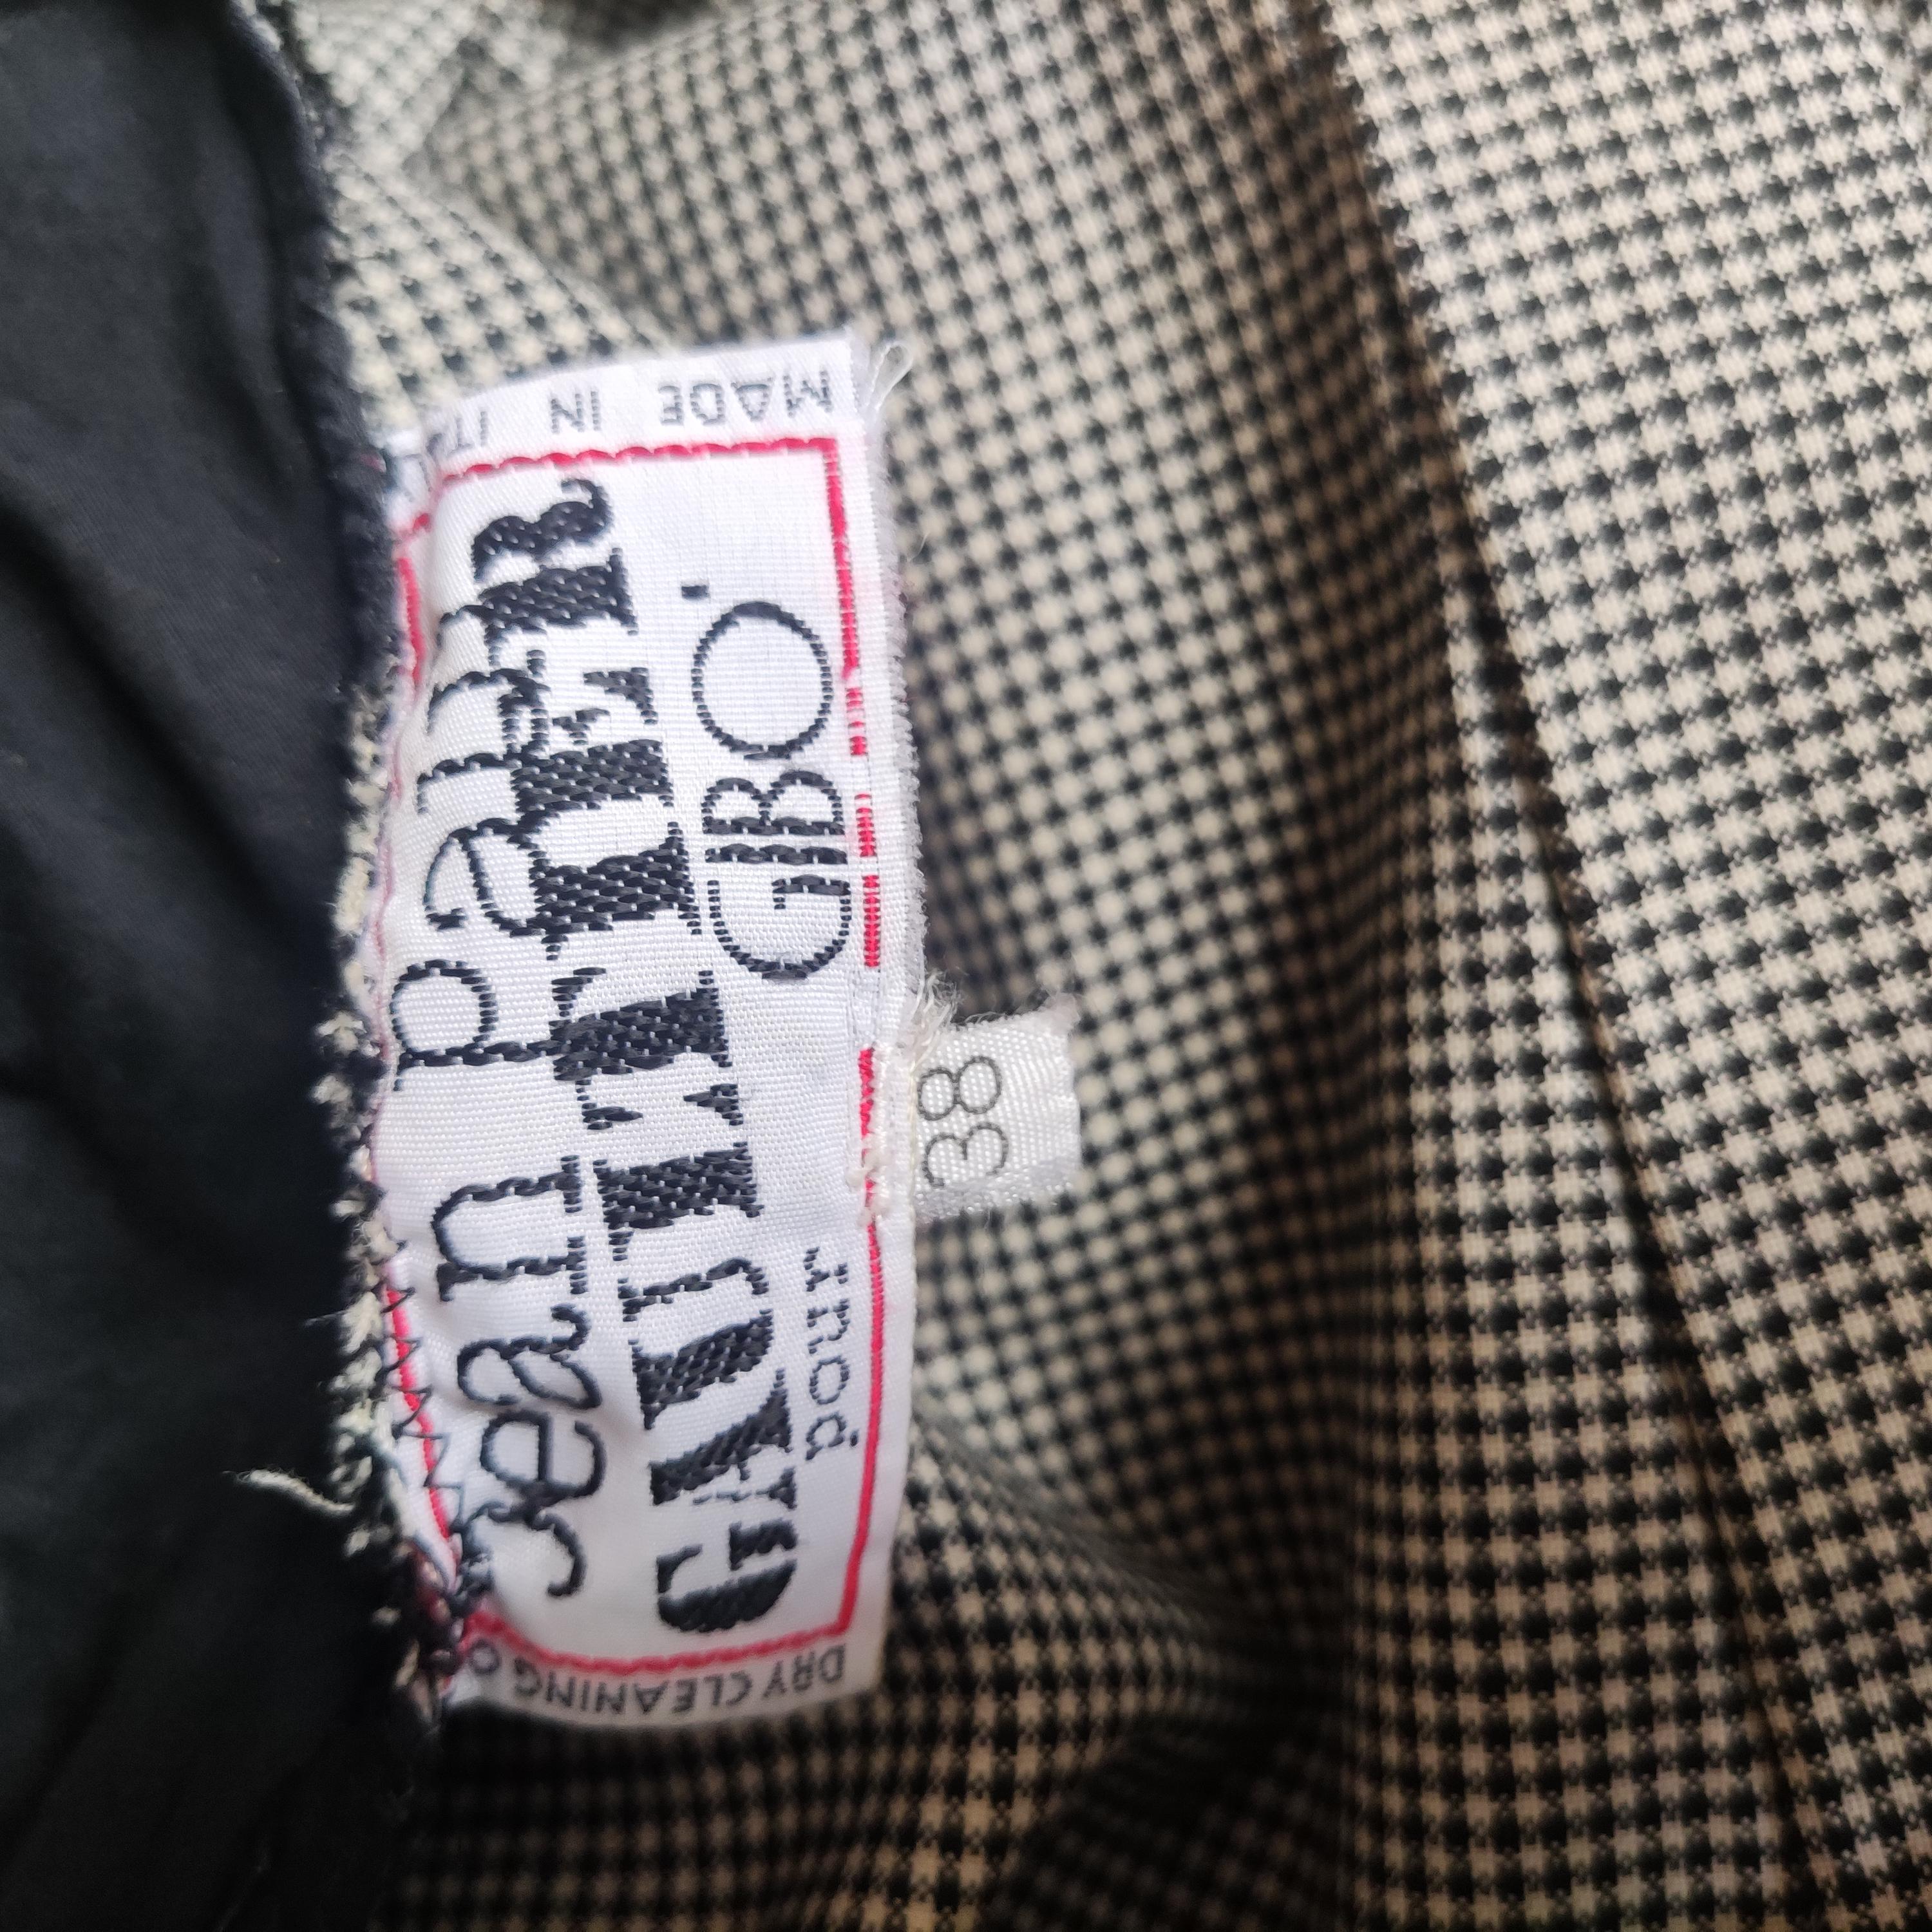 Jean Paul Gaultier Gibo Equator Houndstooth Cigar Vintage Jumpsuit Dress Catsuit For Sale 3